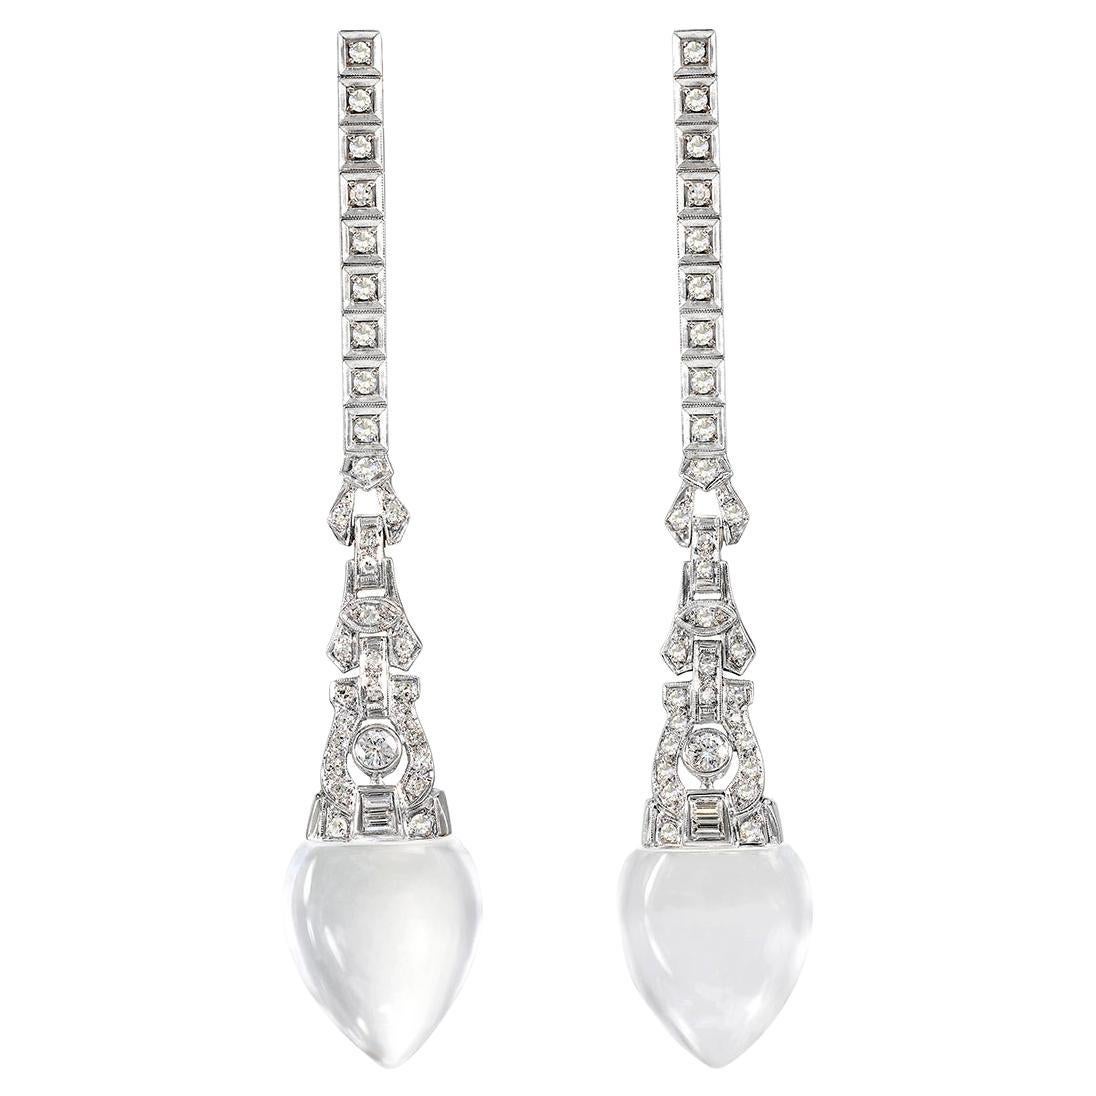 Vintage 14K White Gold Diamond Earrings with Rock Crystal Quartz Drops